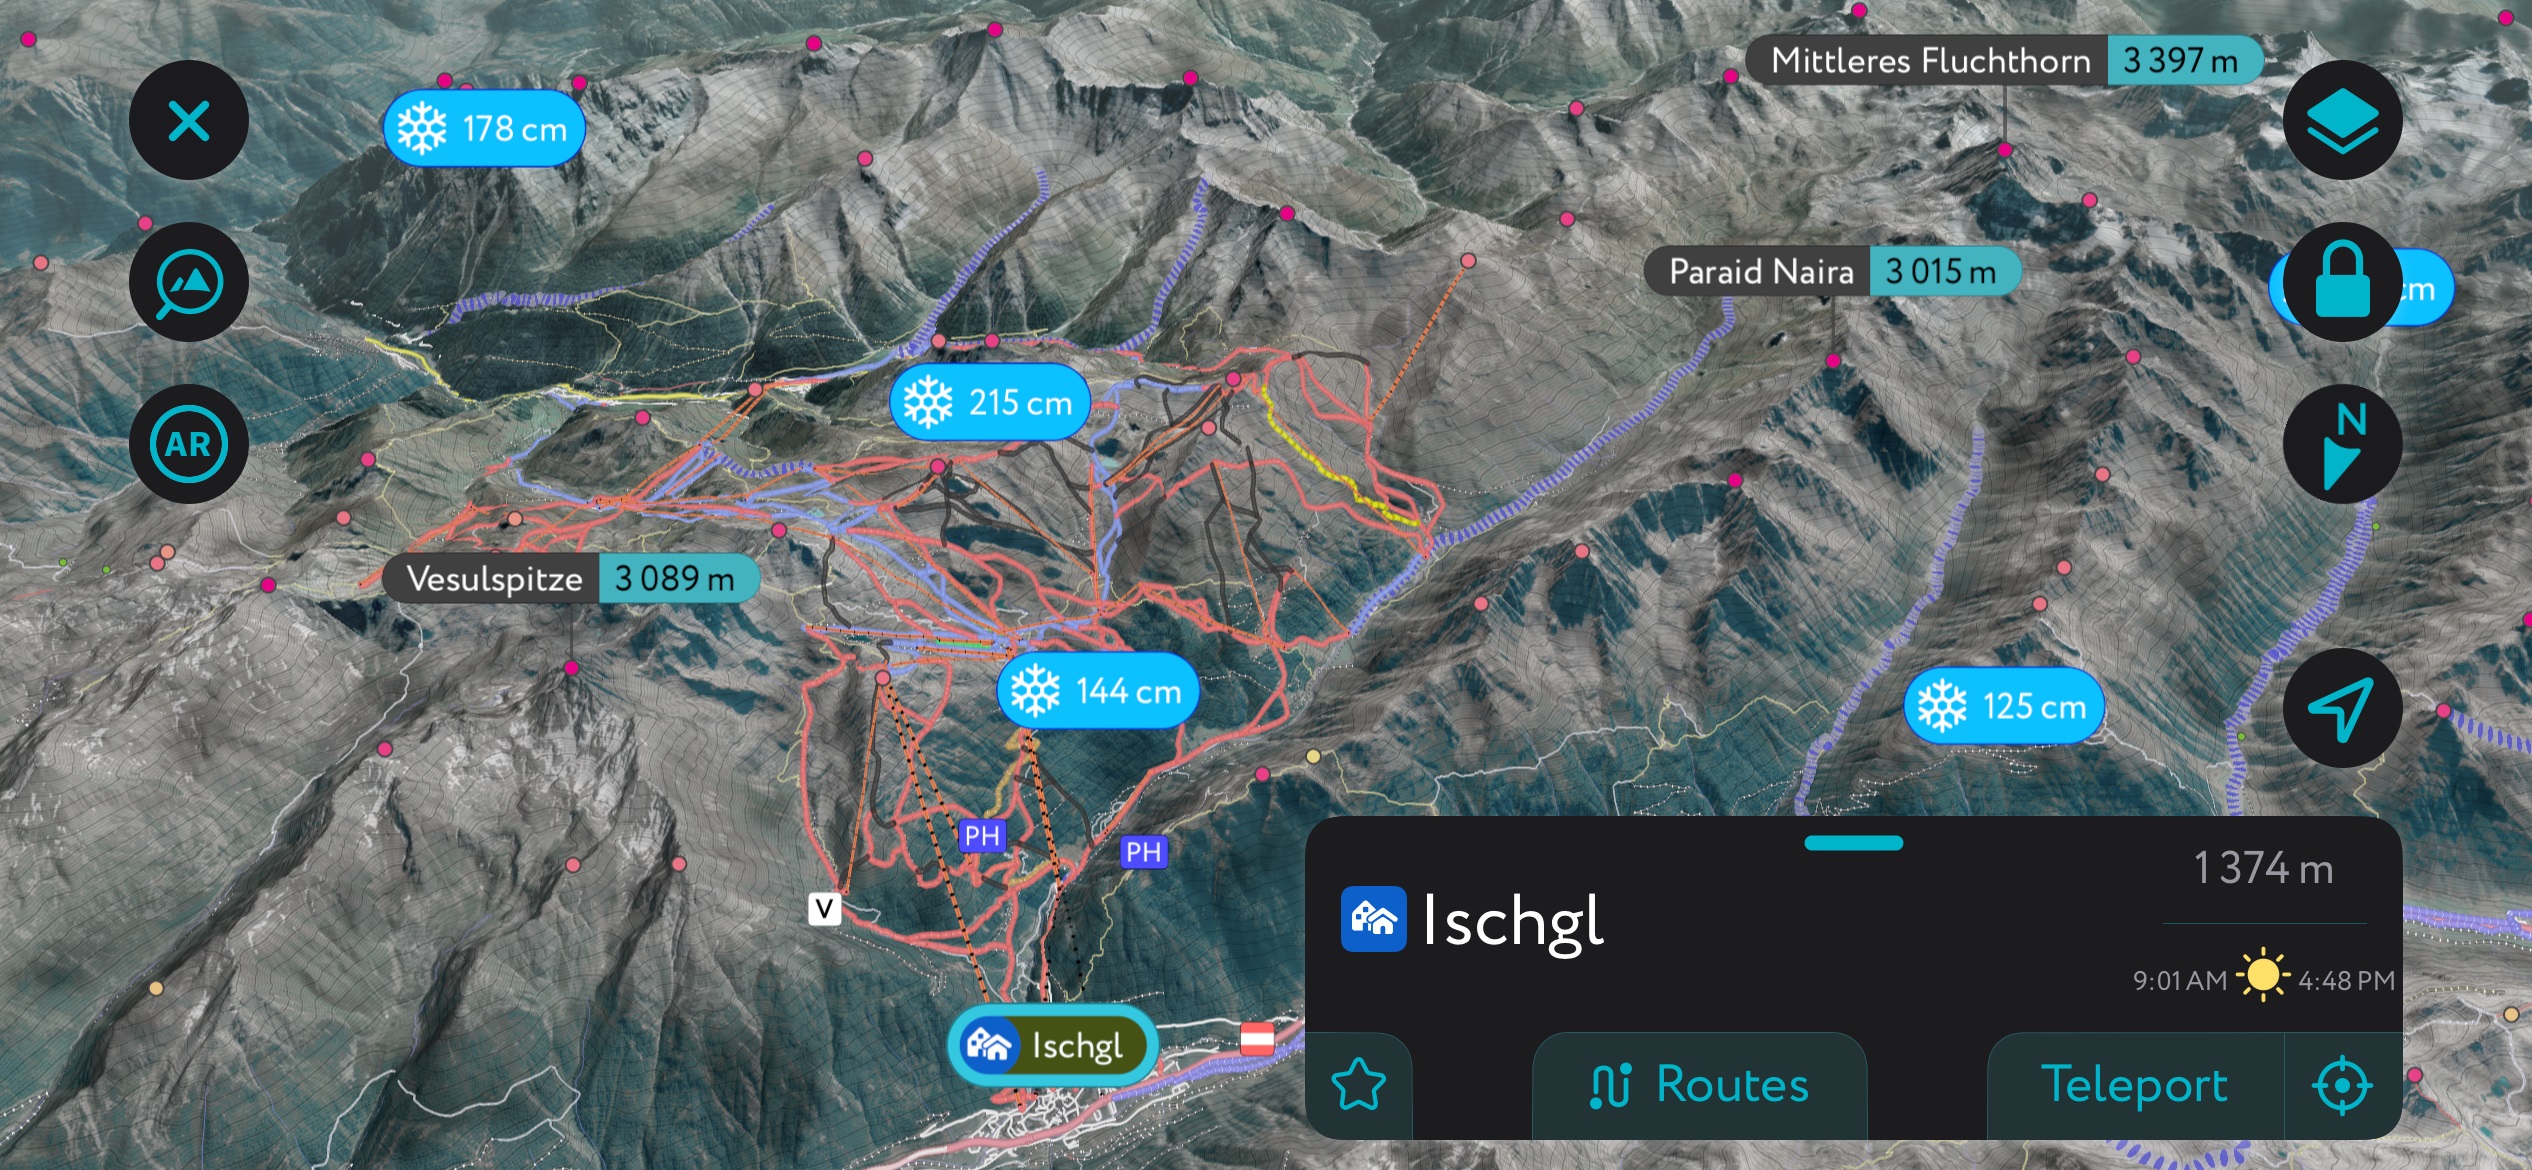 Ischgl Ski Resort on PeakVisor. Silvretta Alps